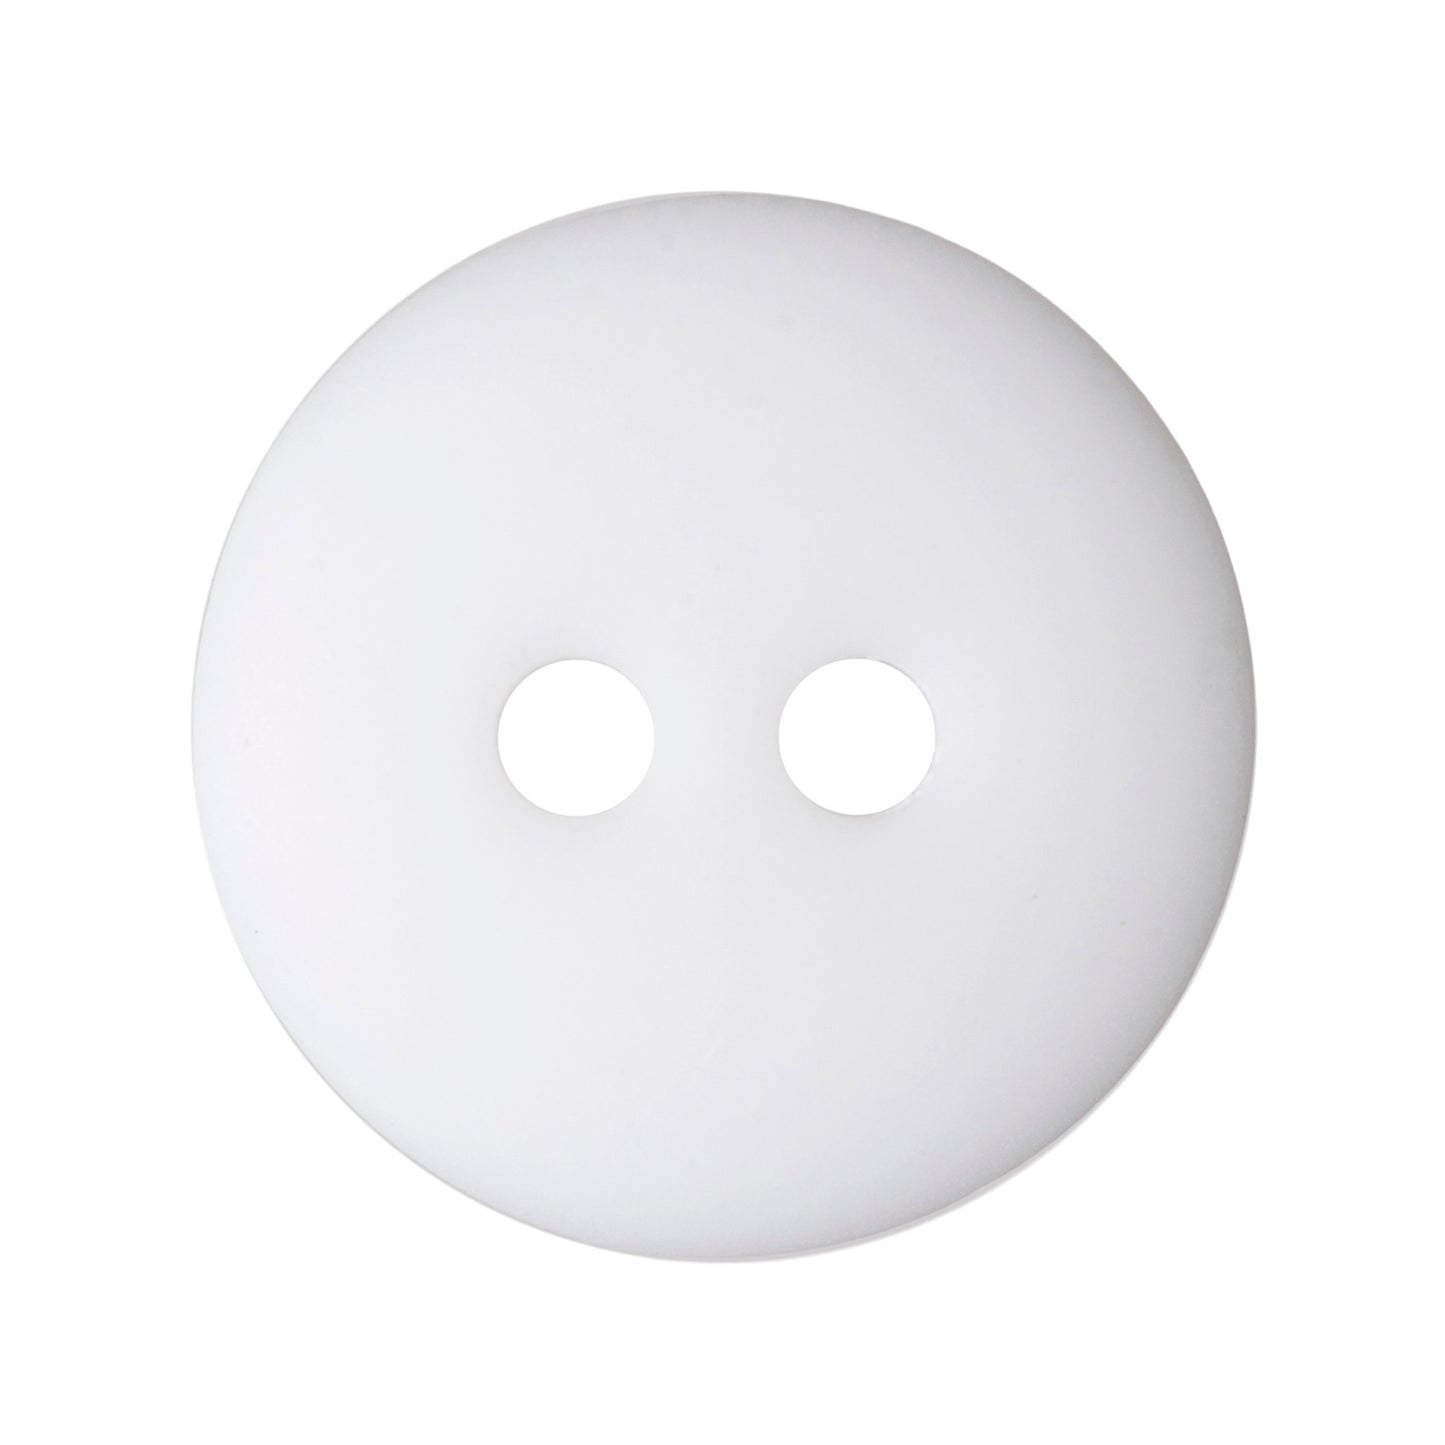 2 Hole Round Matt Button - 11mm - White [LA30.6]